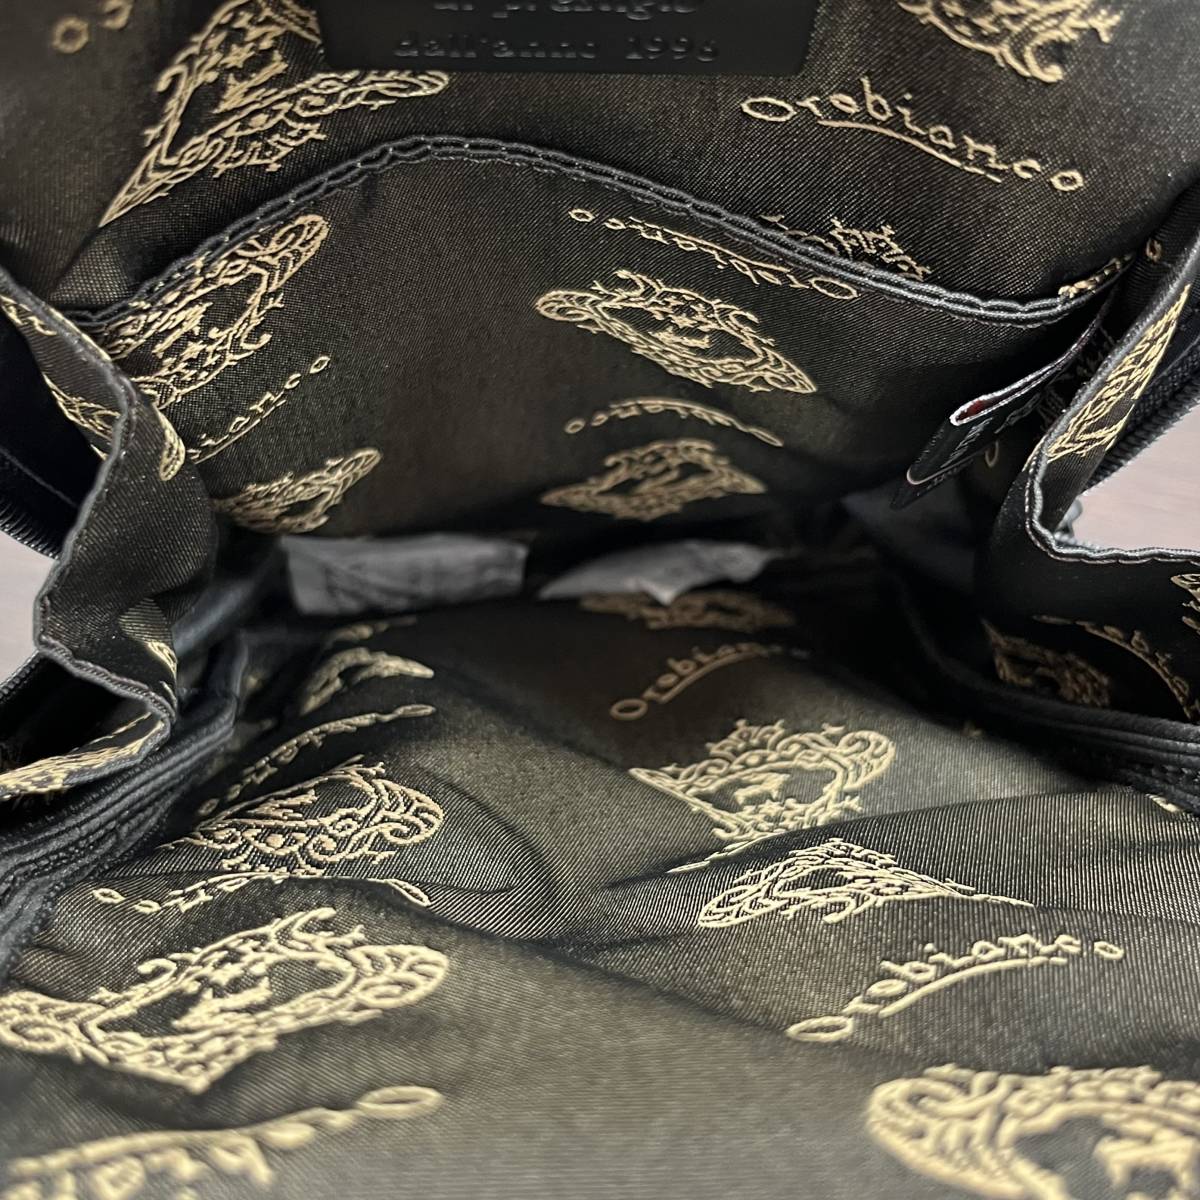 [4181]Orobianco Orobianco body bag waist bag black used 